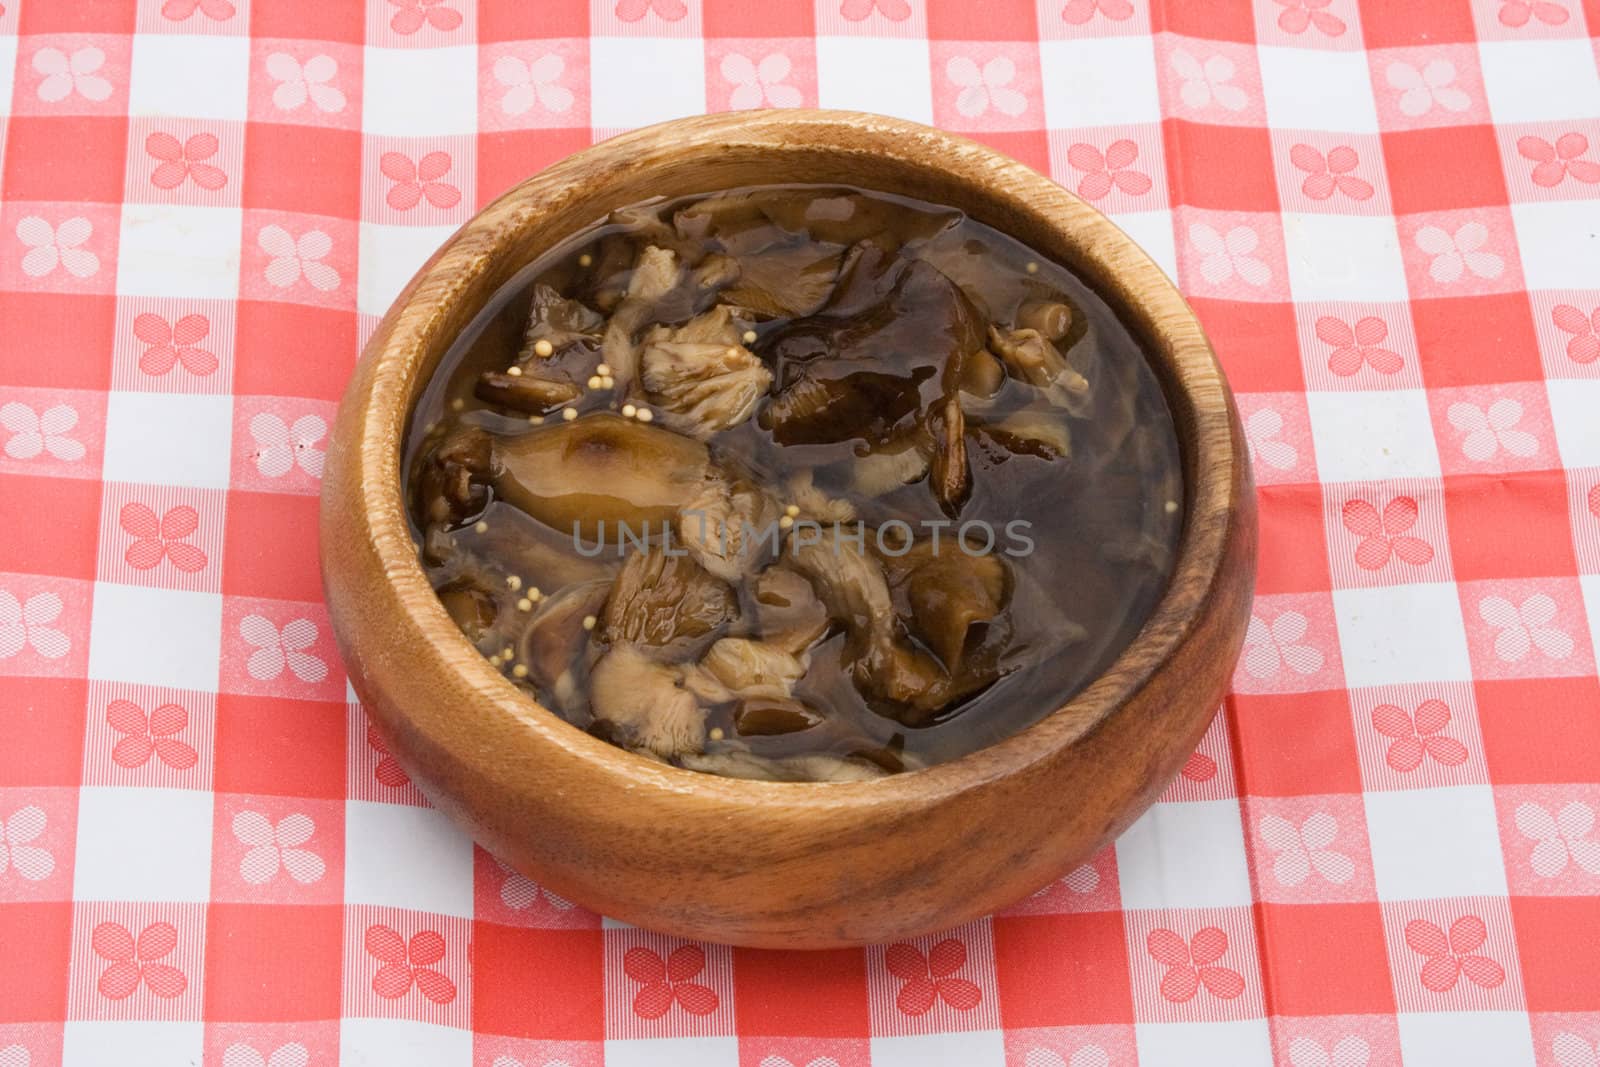 marinated mushrooms by tsvgloom